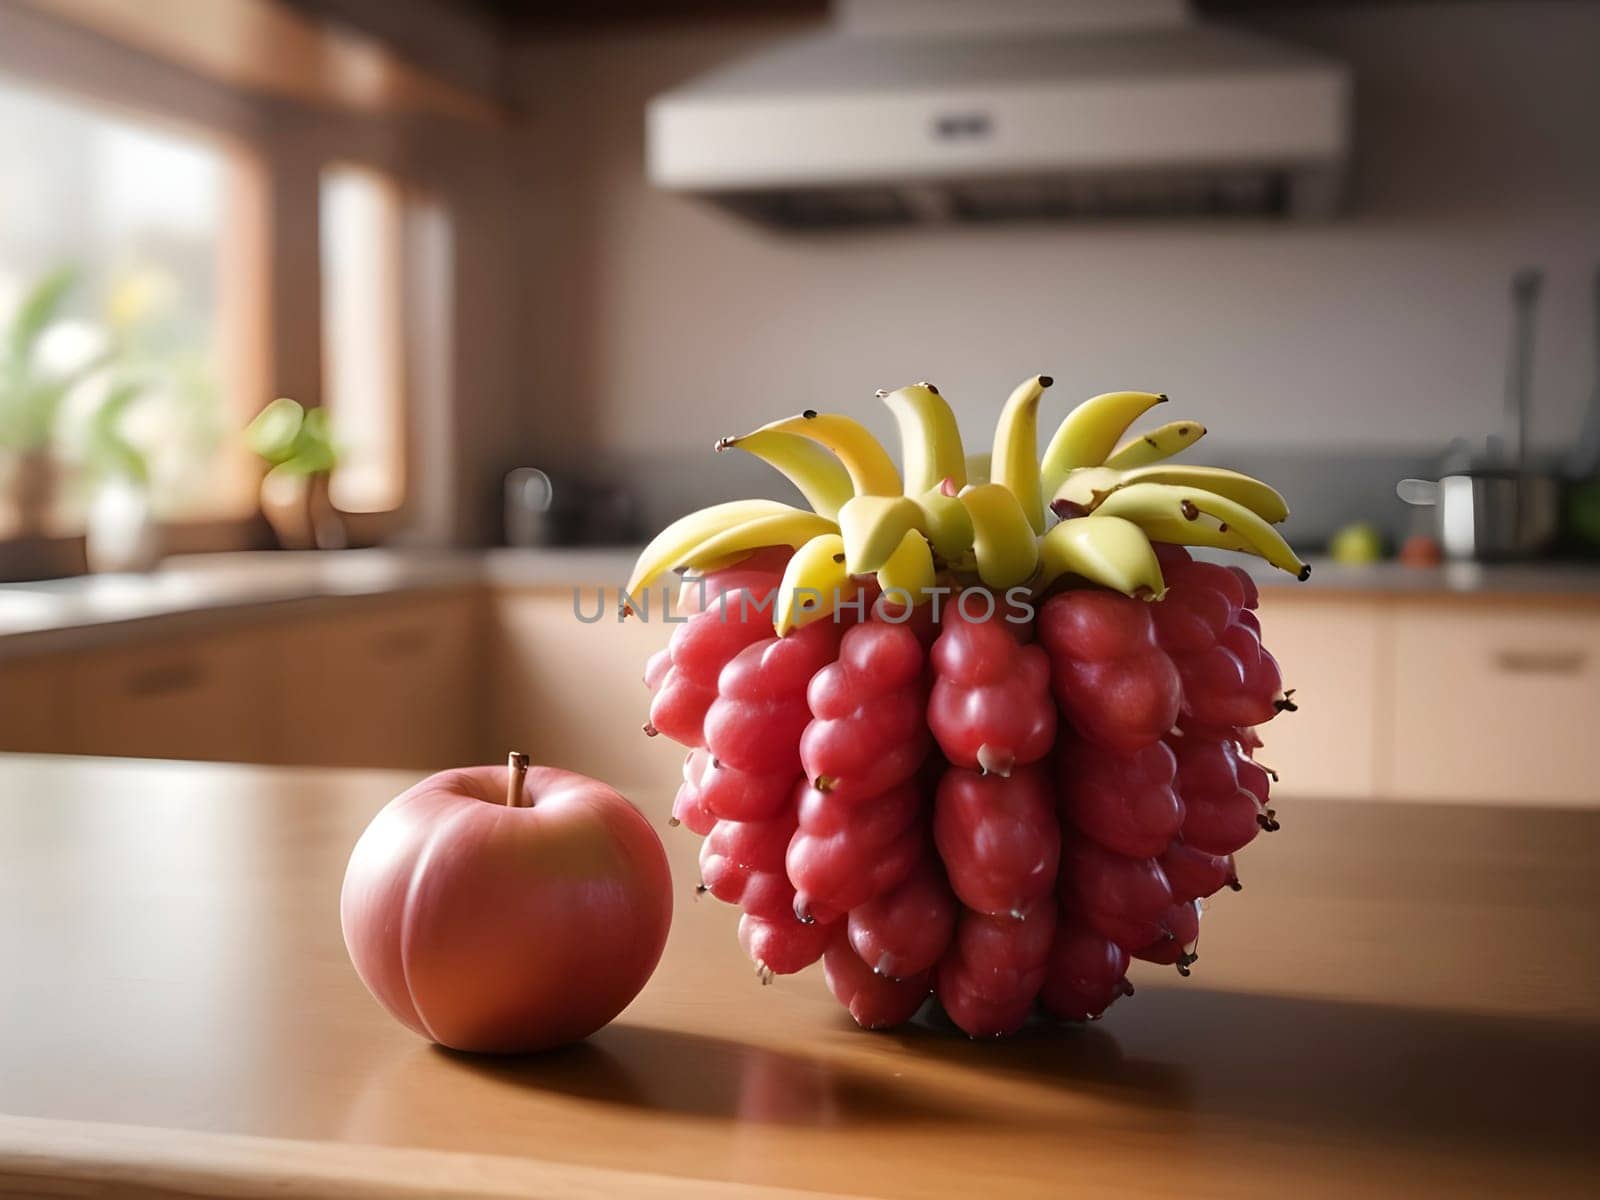 Golden Hour Elegance: Longkong Fruit Centerpiece in a Cozy, Sunlit Kitchen.